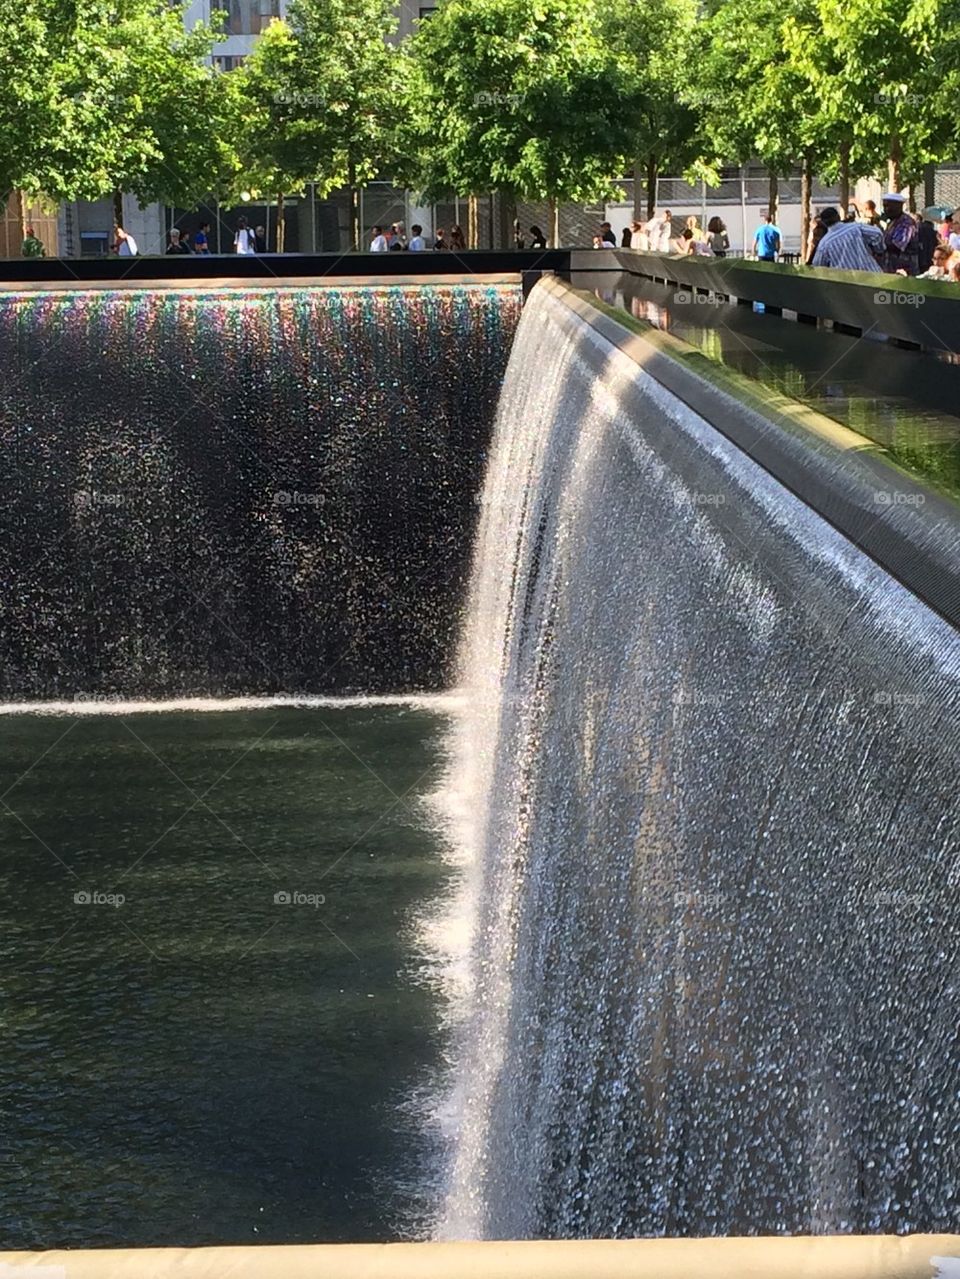 9/11 Memorial photo 2